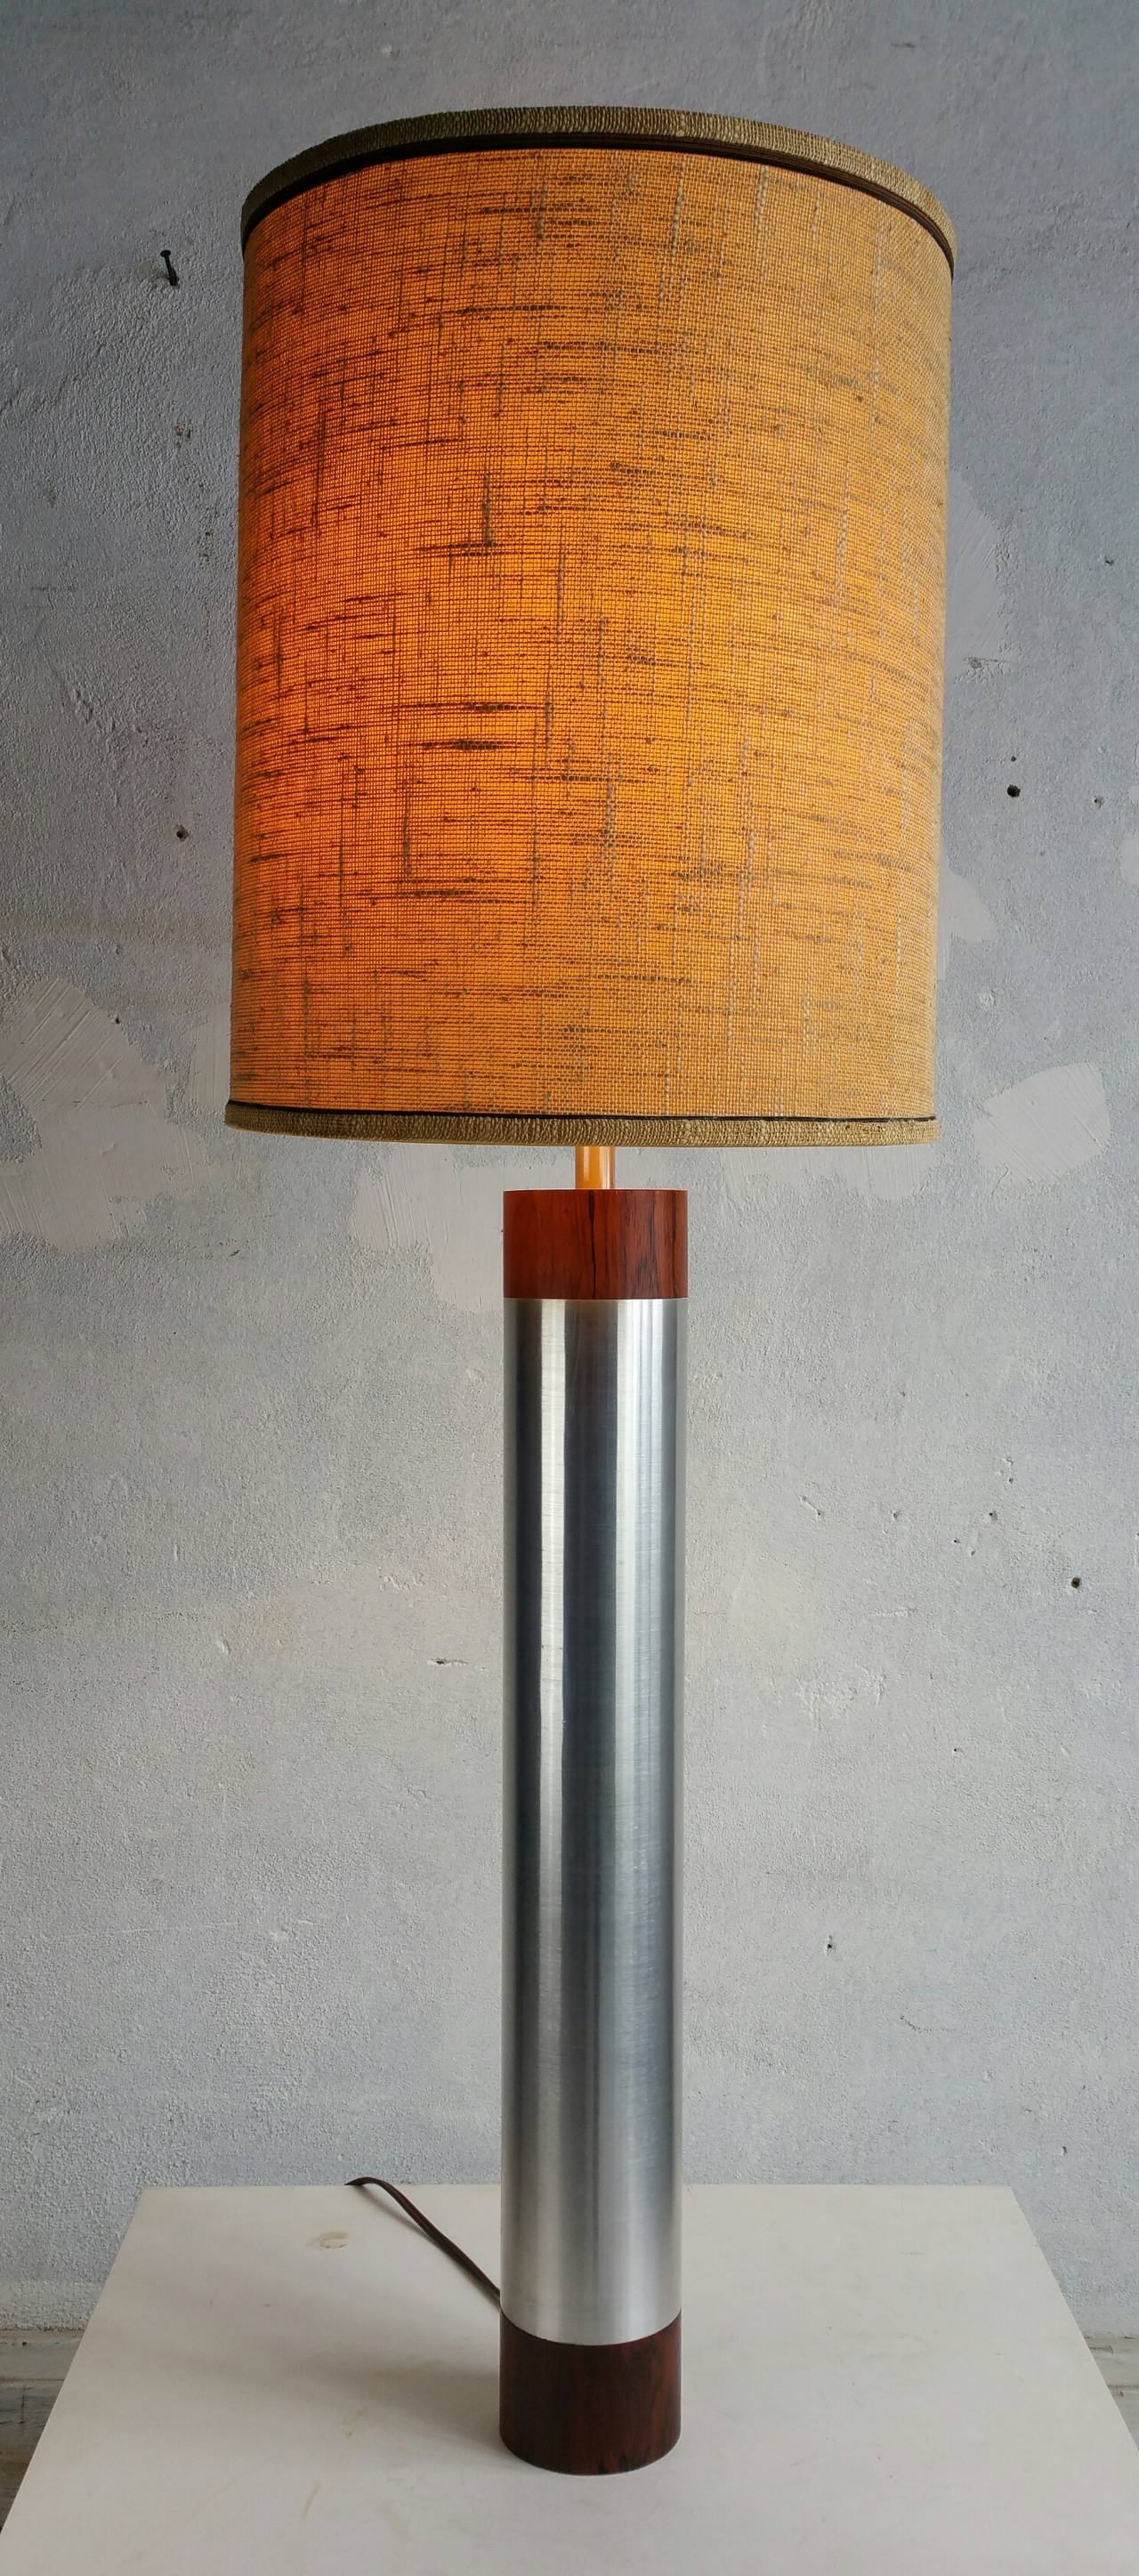 Wonderful Architectural Large Scale Table Lamp..Polished  aluminum and rosewood,, Retains original lamp shade,, Amazing scale and design,, Simple ,,Sleek,, Elegant,